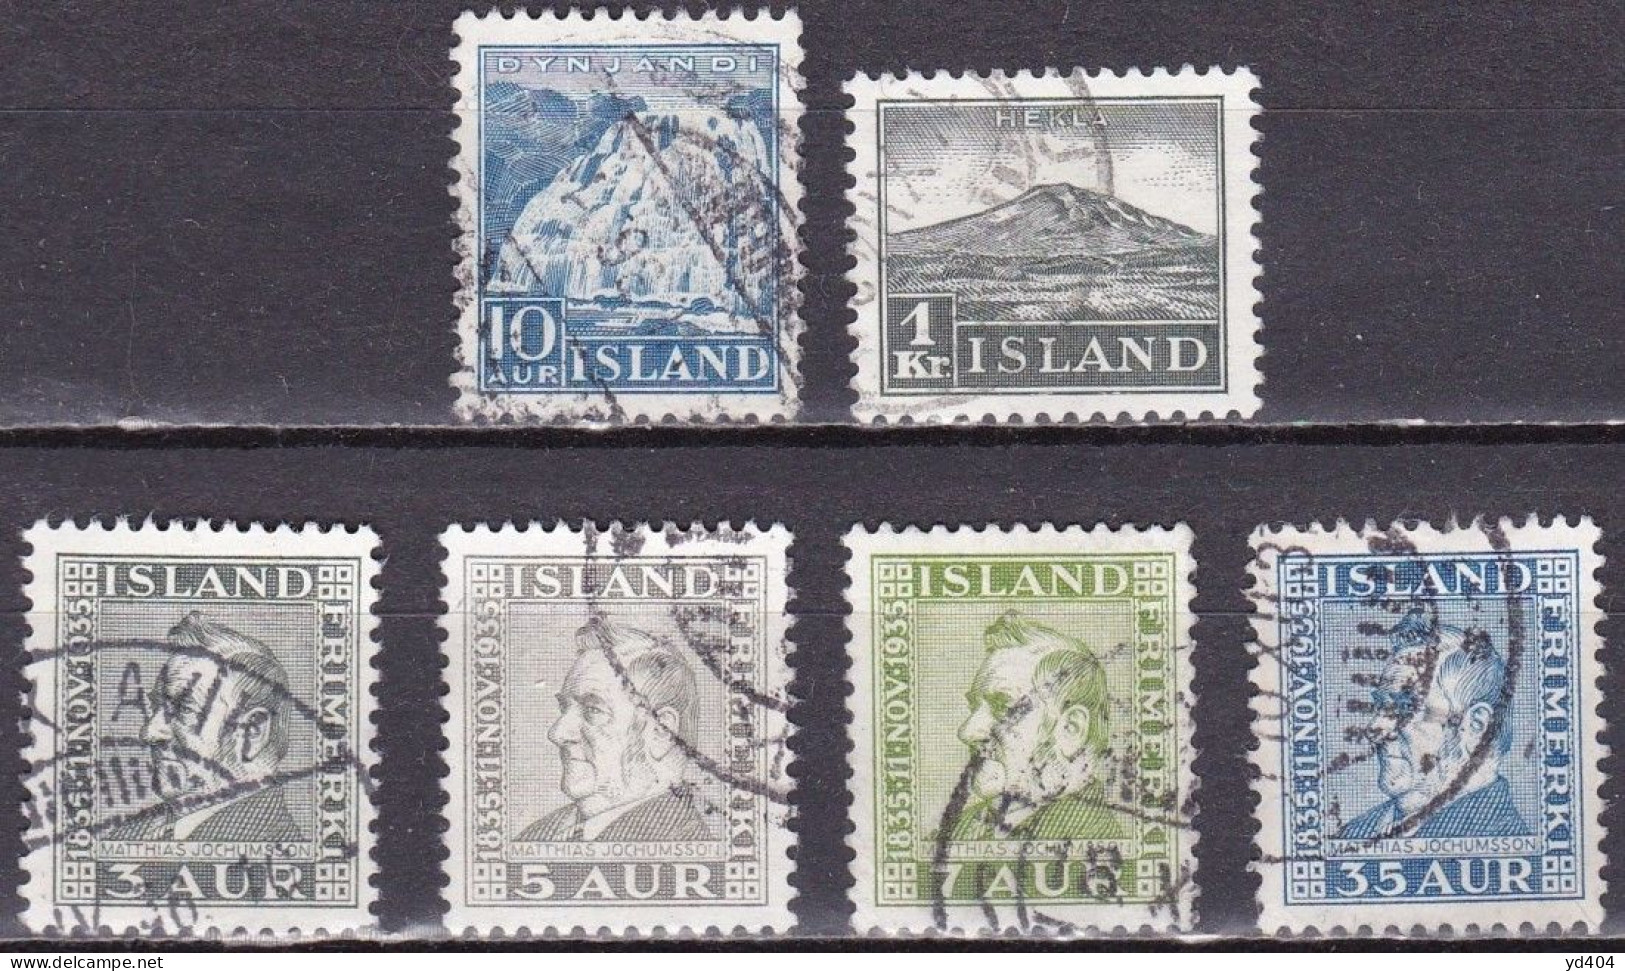 IS032 – ISLANDE – ICELAND – 1935 – FULL YEAR SET – SG # 214/9 USED 11 € - Usati